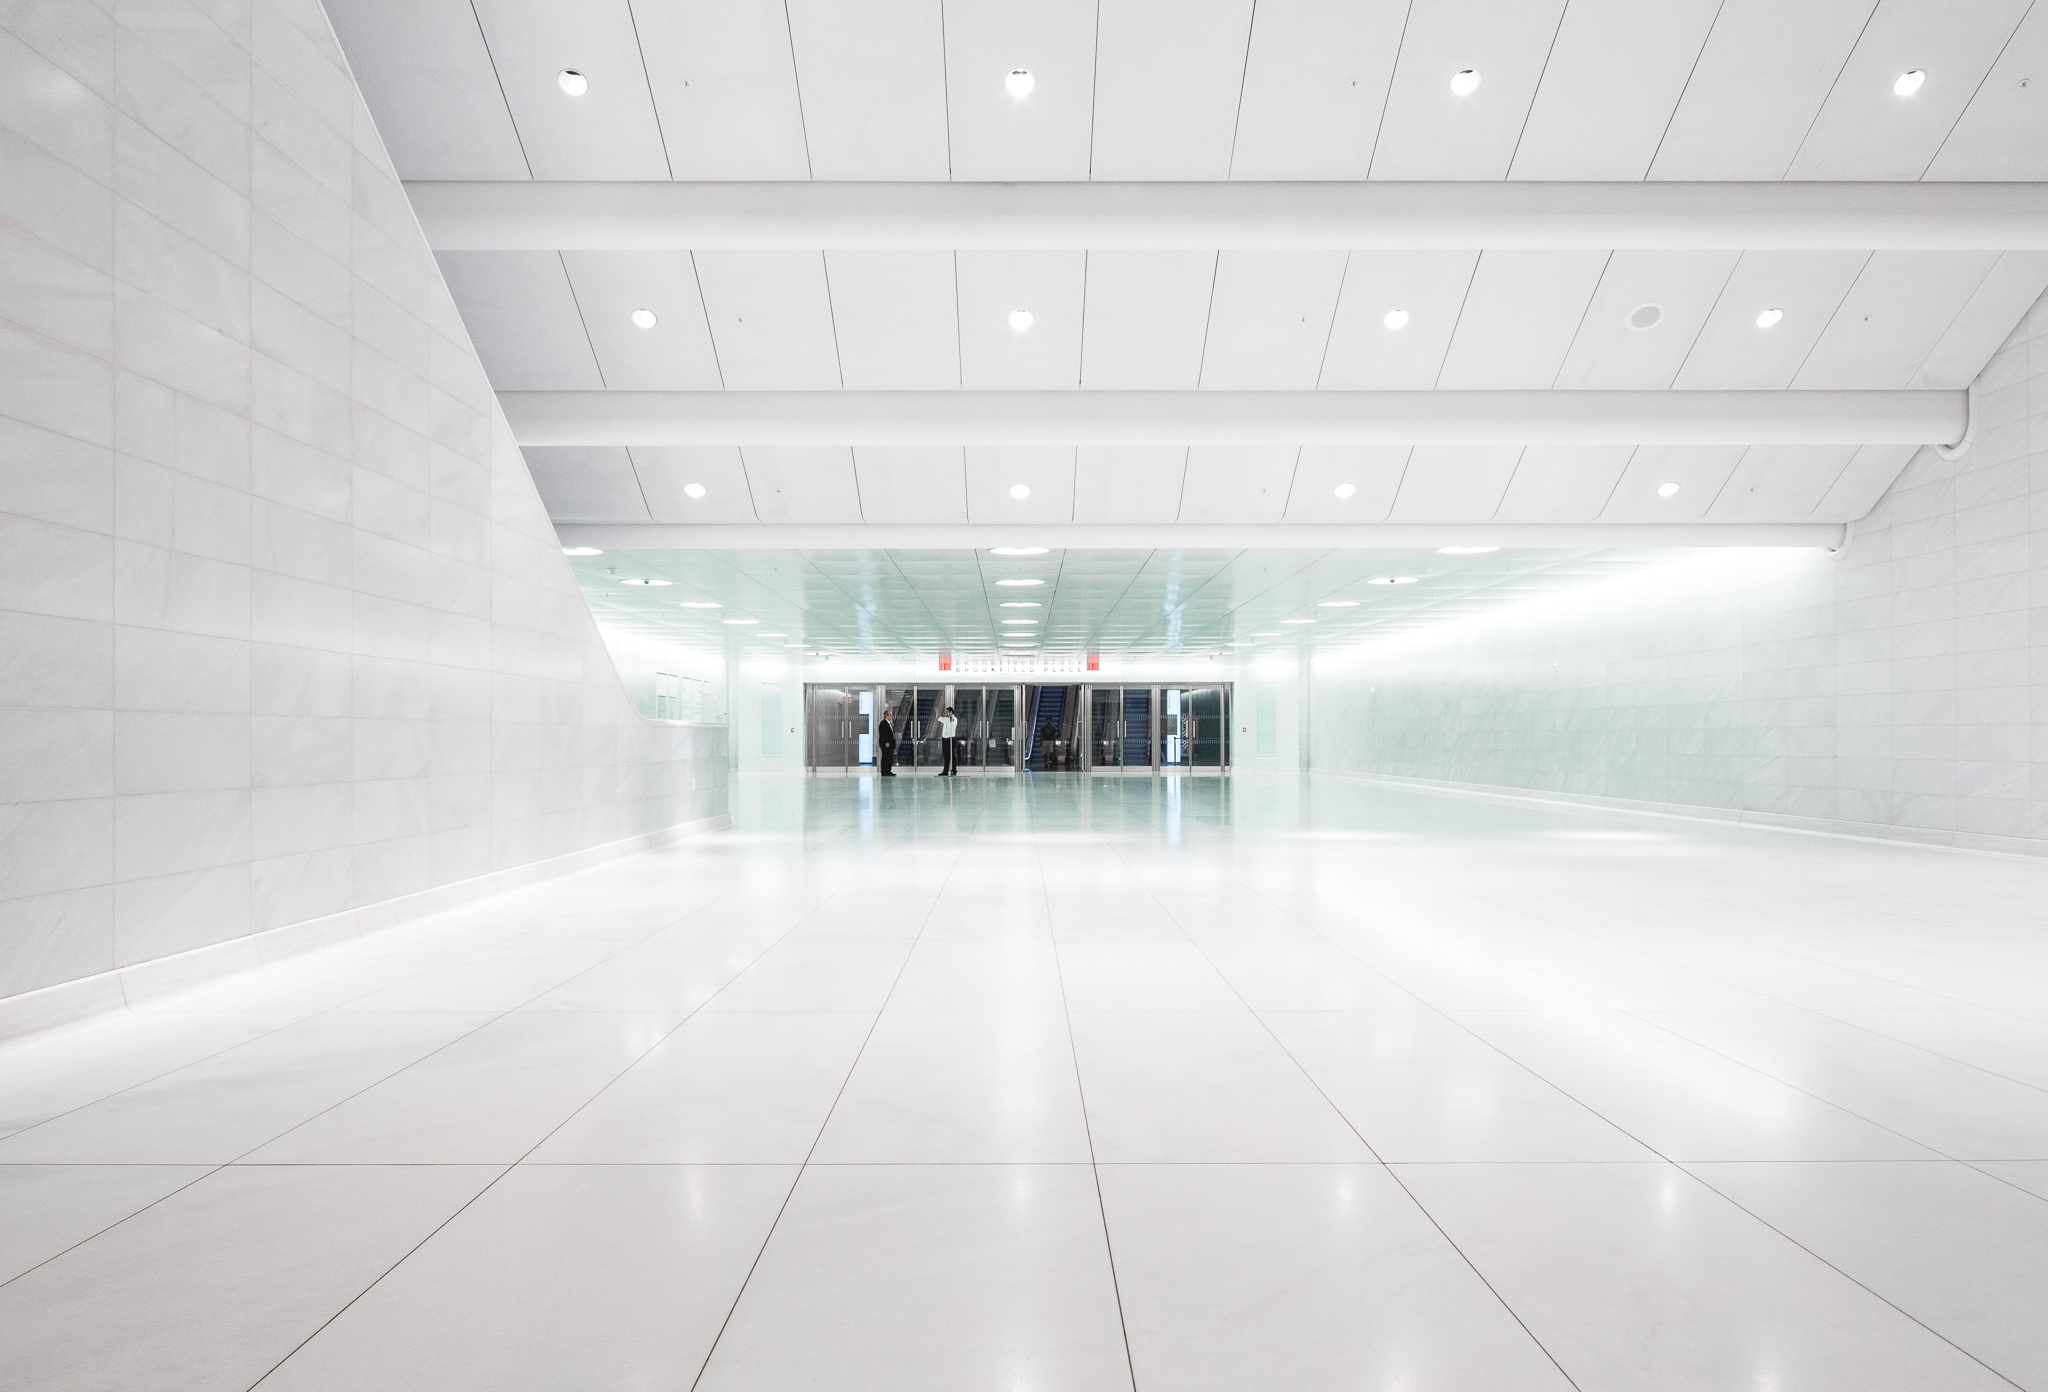 World Trade Center PATH Station concourse by Santiago Calatrava.